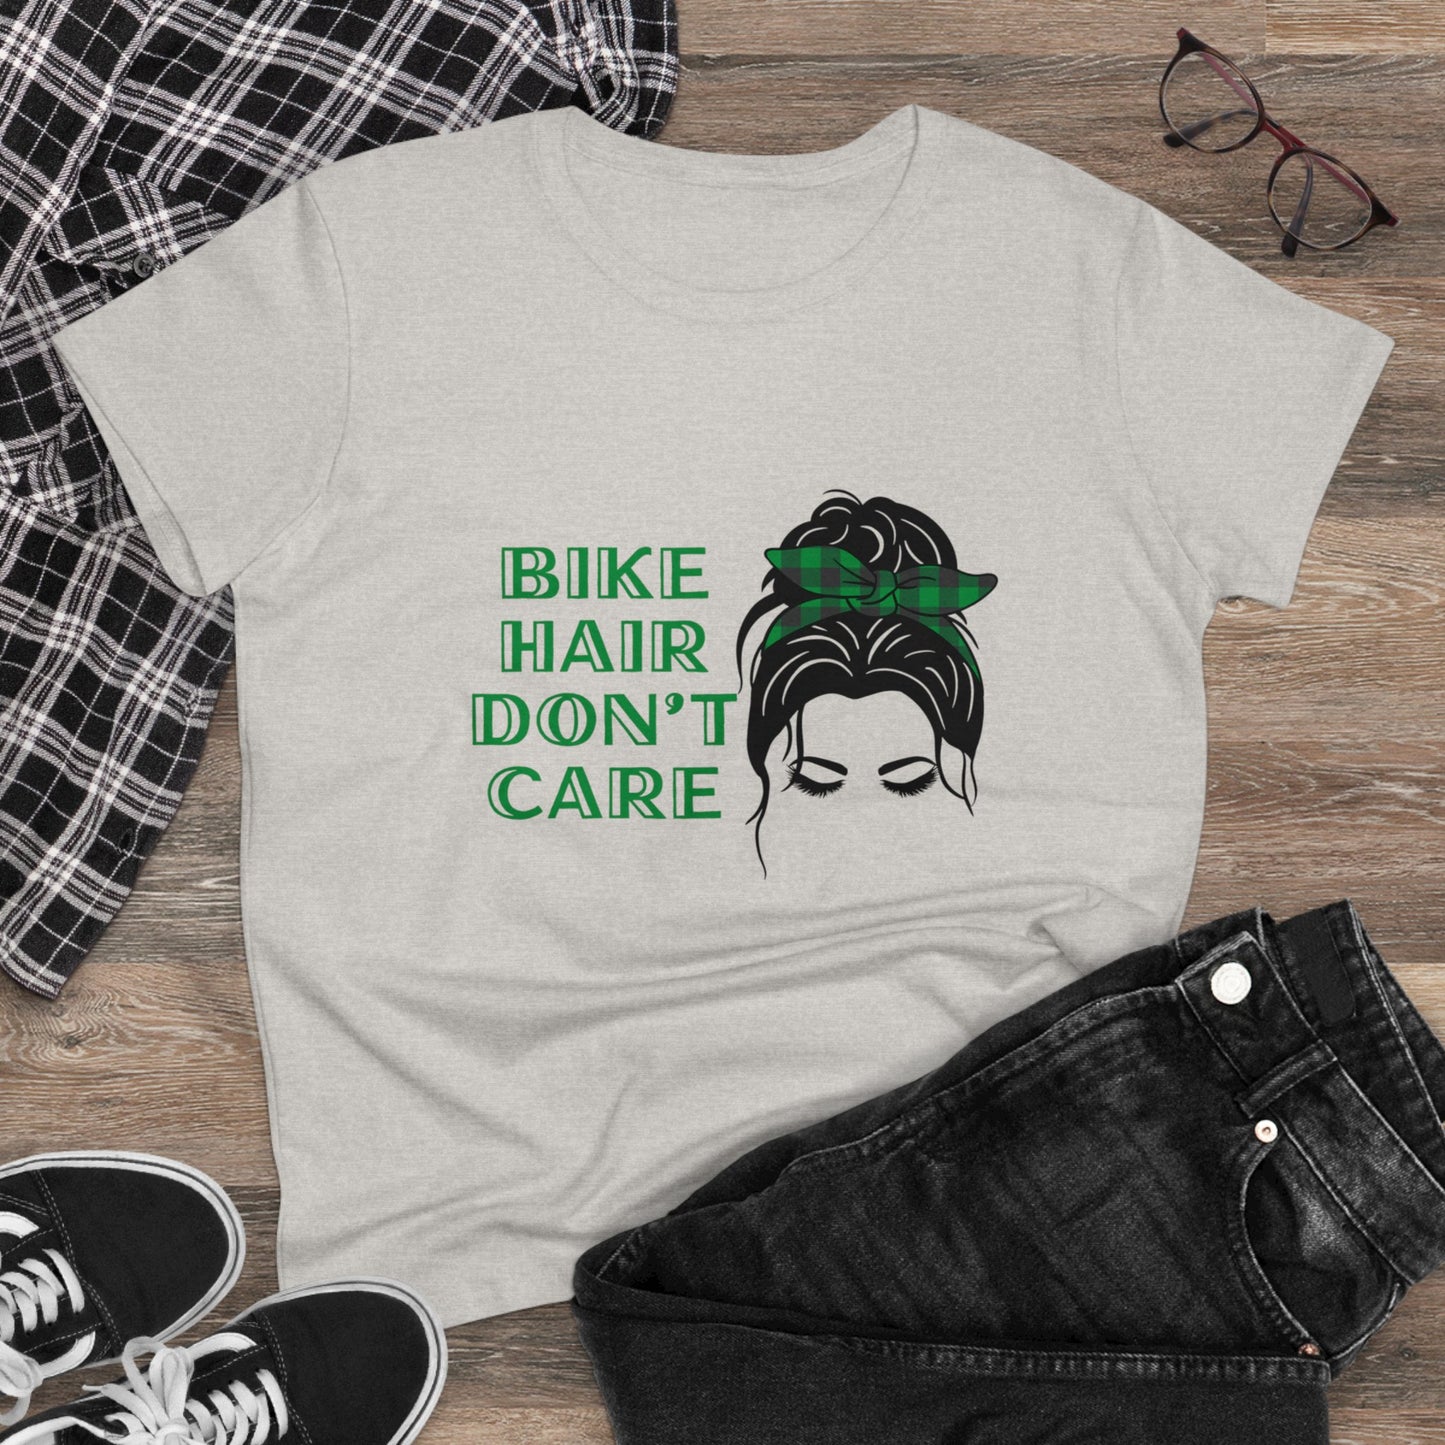 Bike Hair - Don't Care Tee for Women